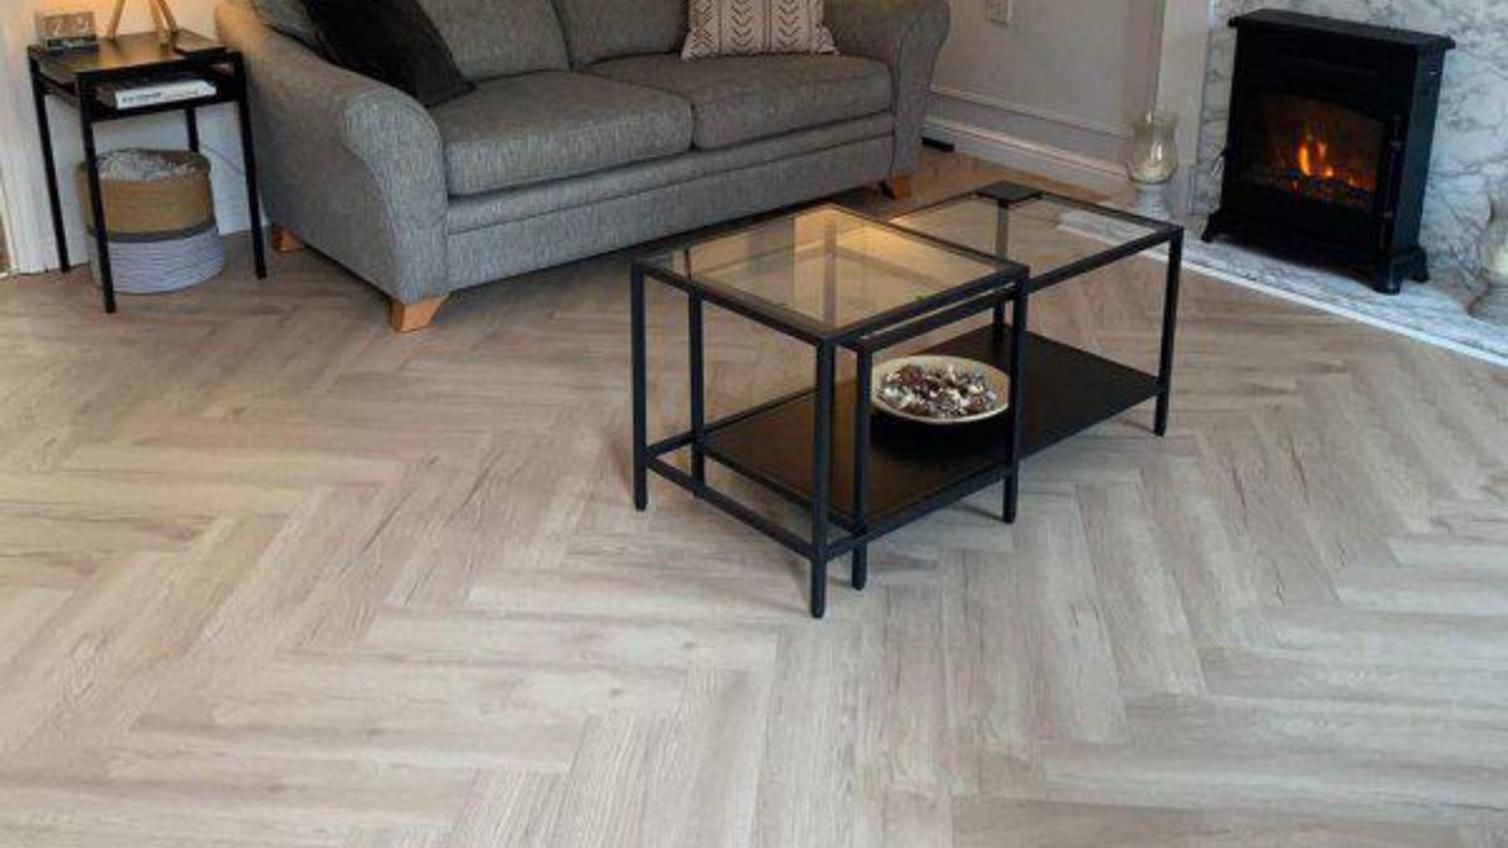 Oake and Gray herringbone vanilla oak flooring in a bright and inviting sitting room